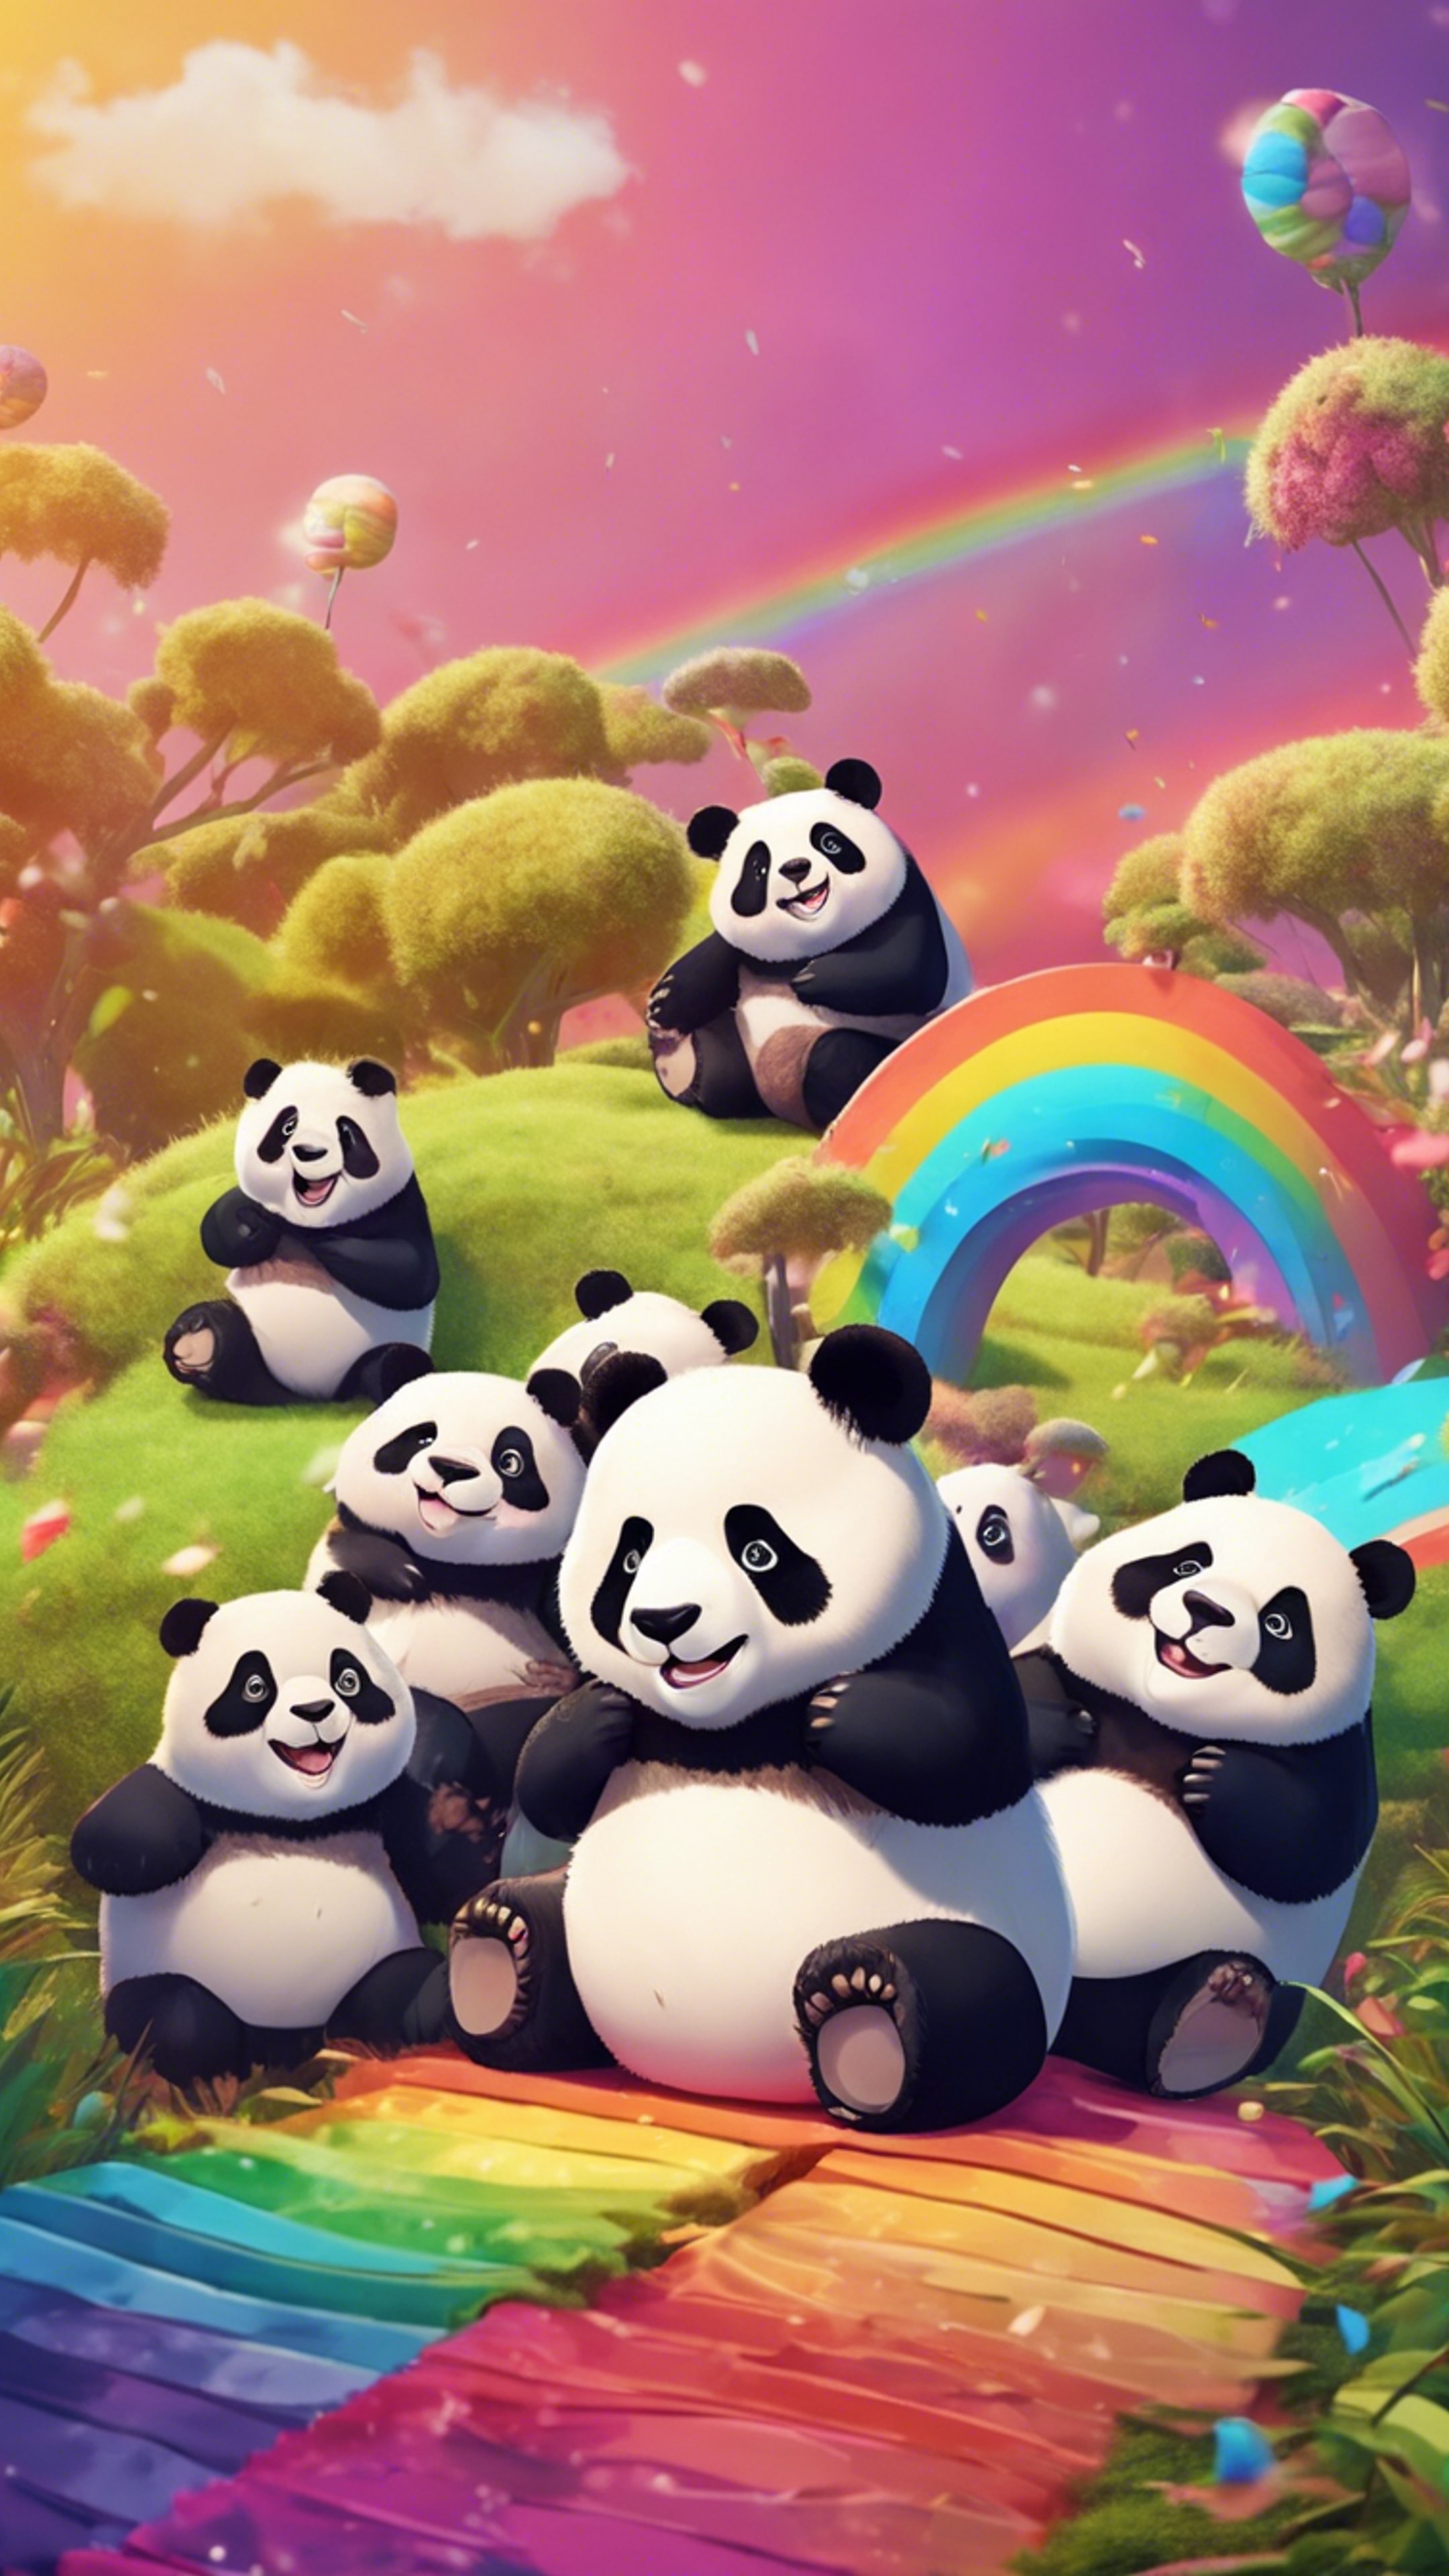 A group of chubby, adorable pandas sliding down a vibrant rainbow.壁紙[164879d3f9f4475687c2]